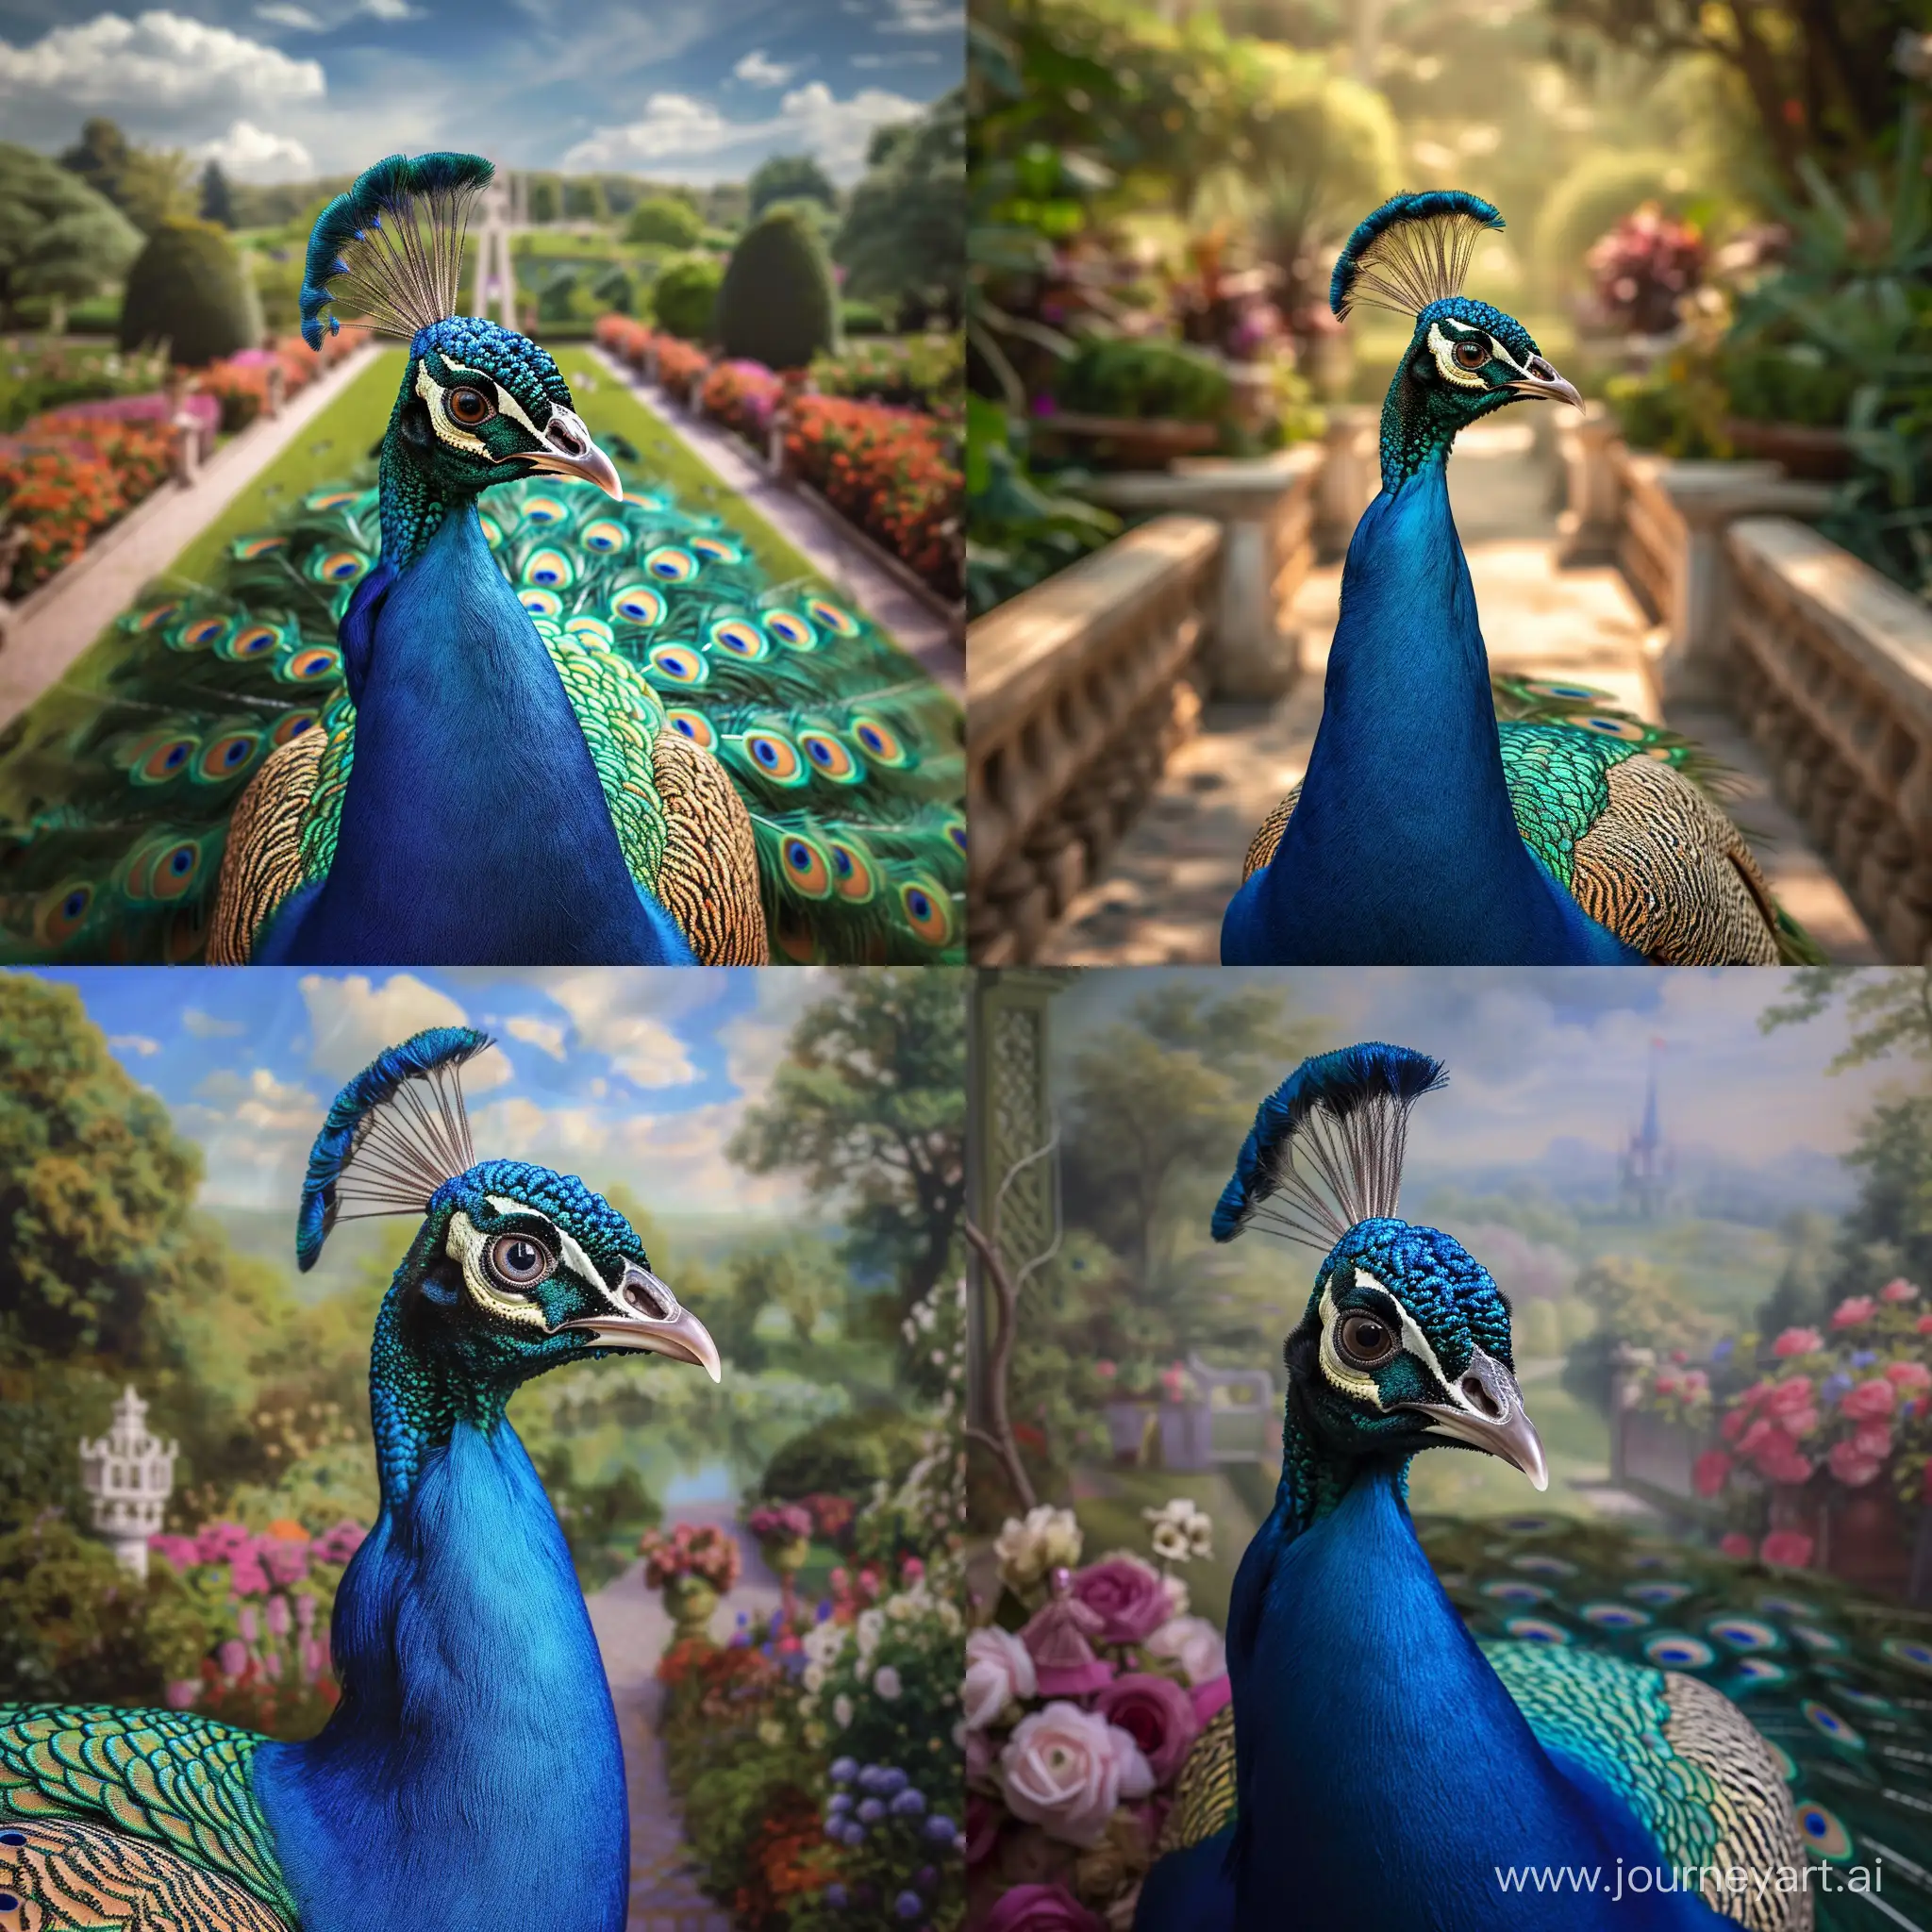 Ultra realistic Peacock, focused Photo on peacock, epic fairytale garden seen behind